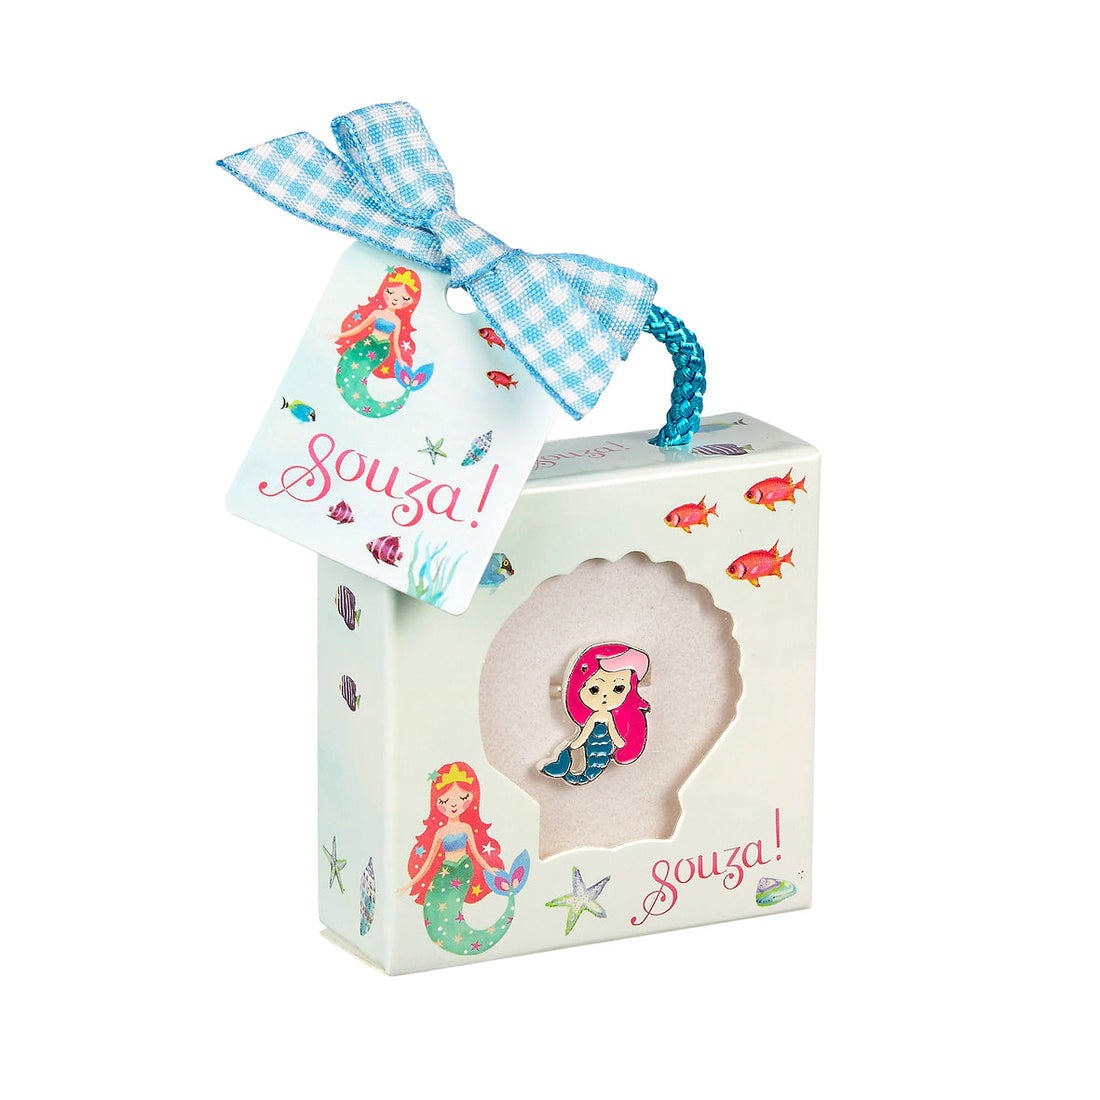 souza-gift-box-sea-ring-souz-106415-